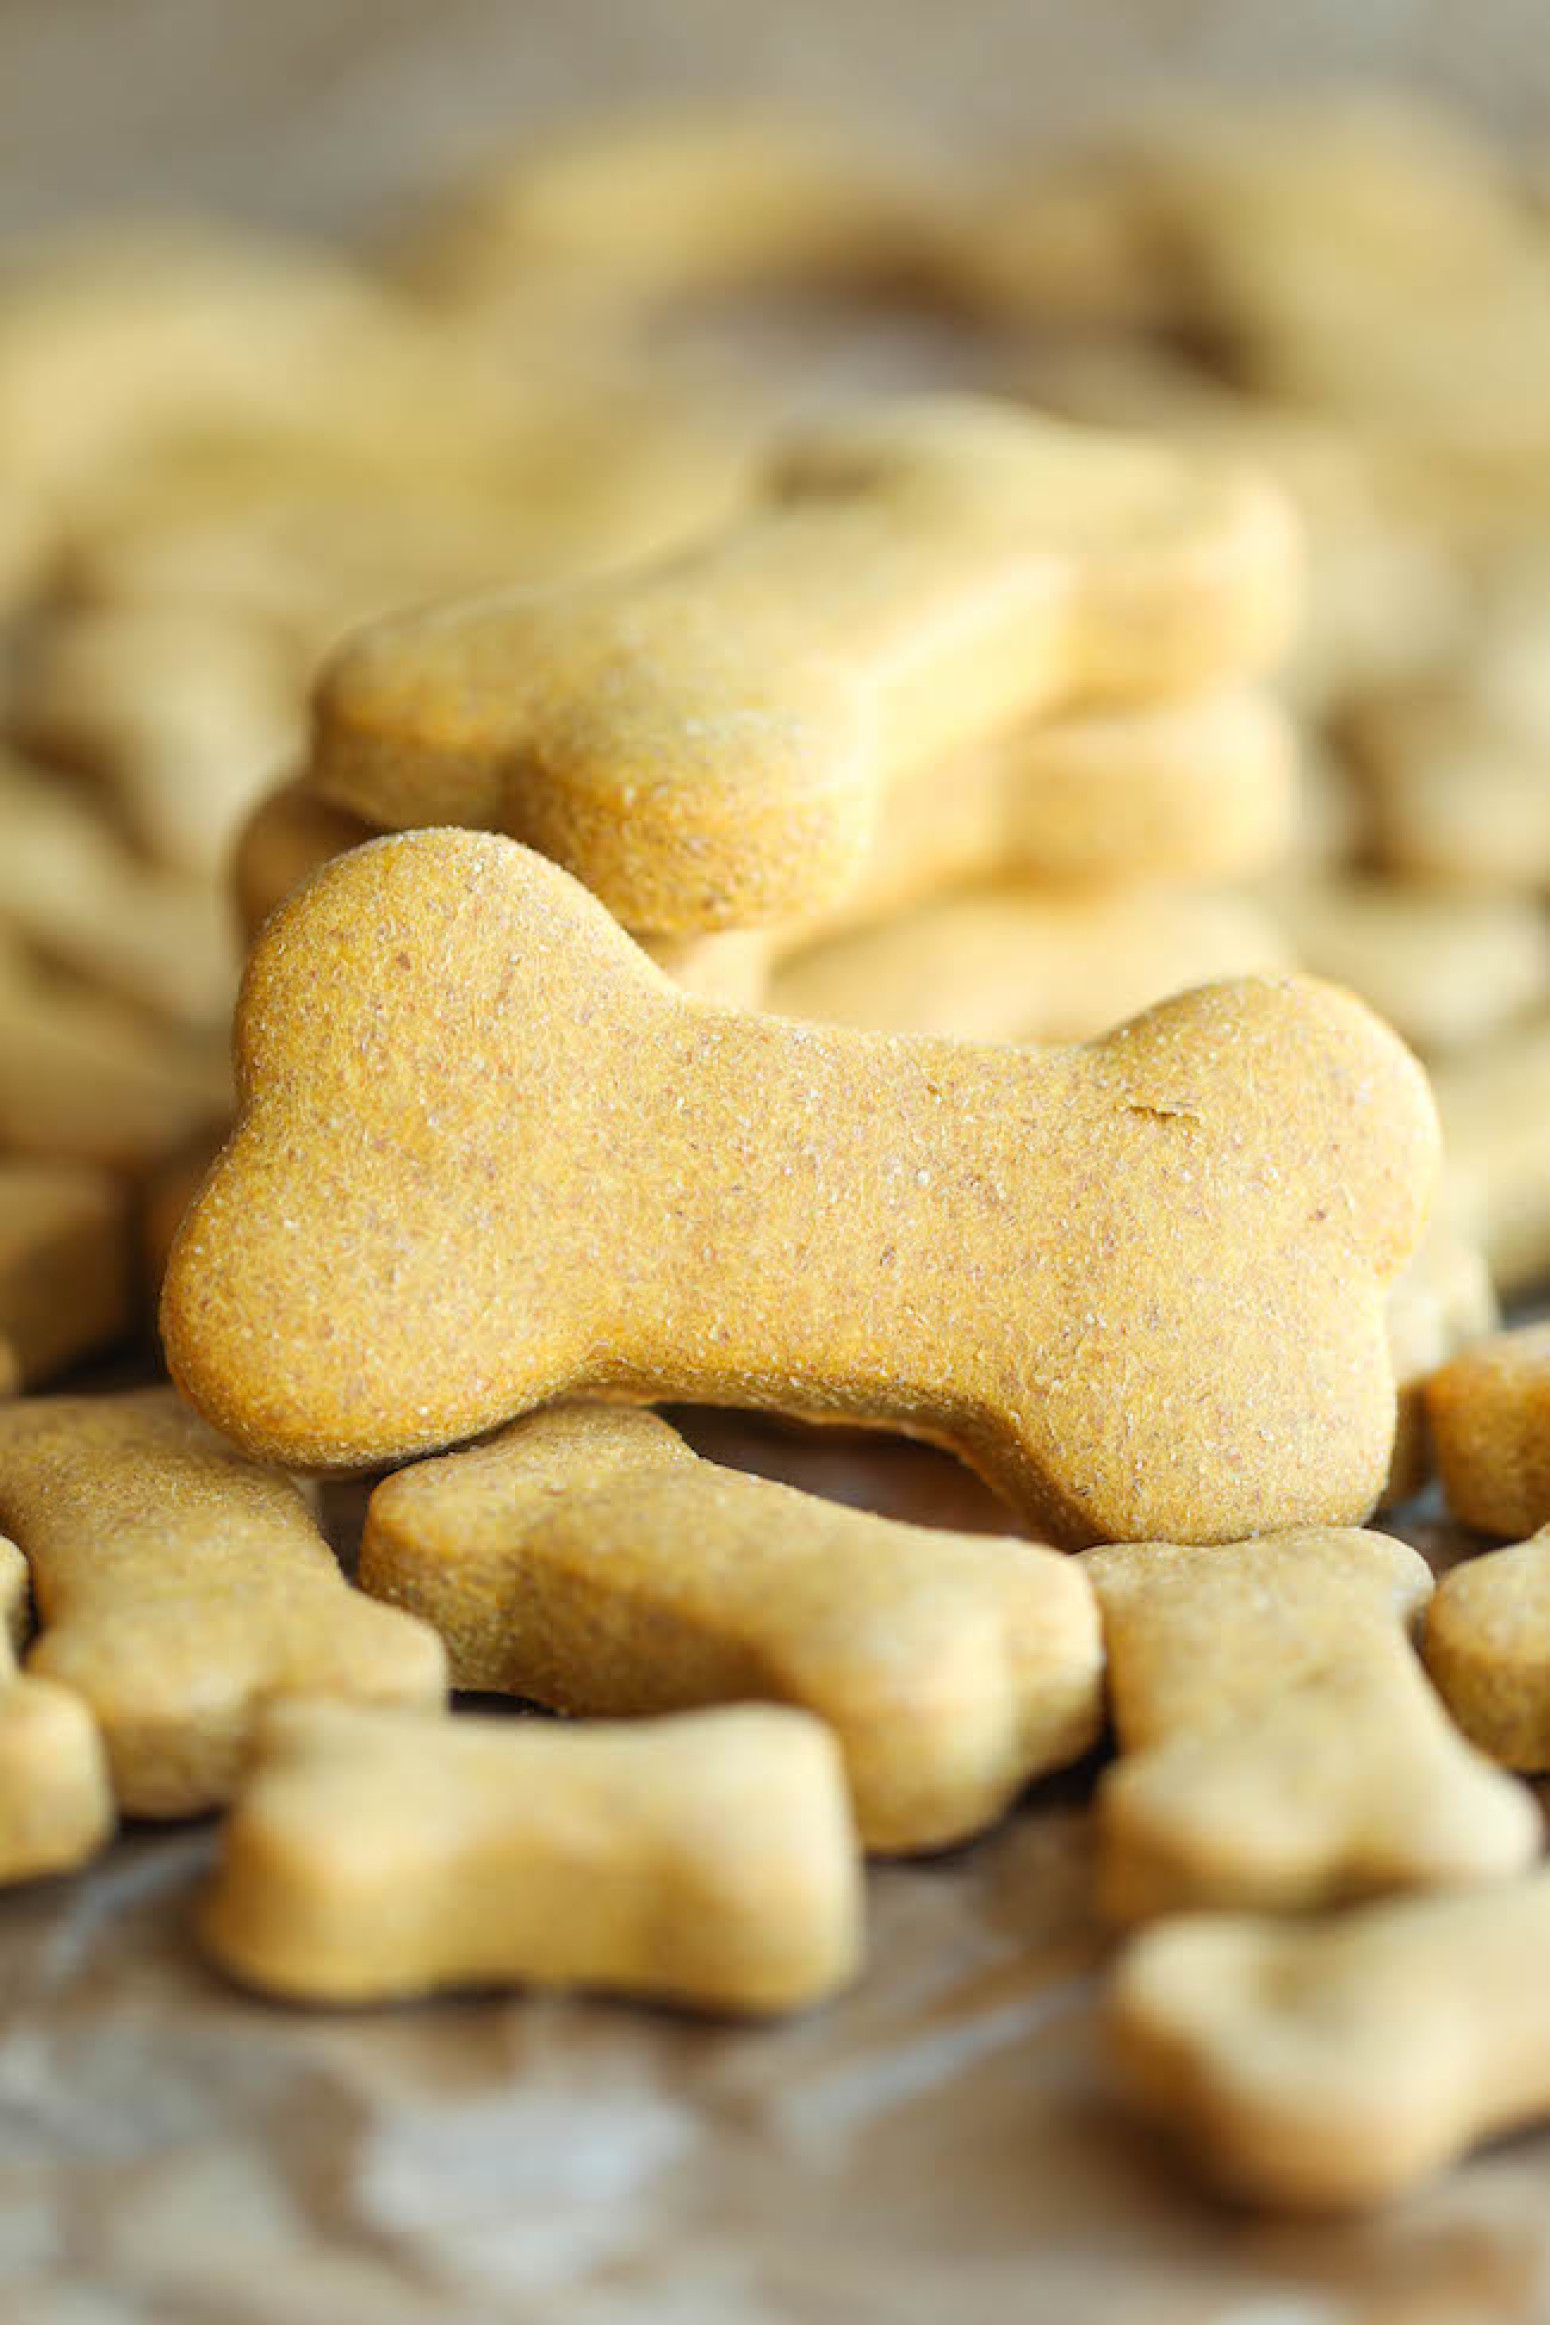 DIY Dog Treats With Peanut Butter
 Homemade Peanut Butter Dog Treats Recipe